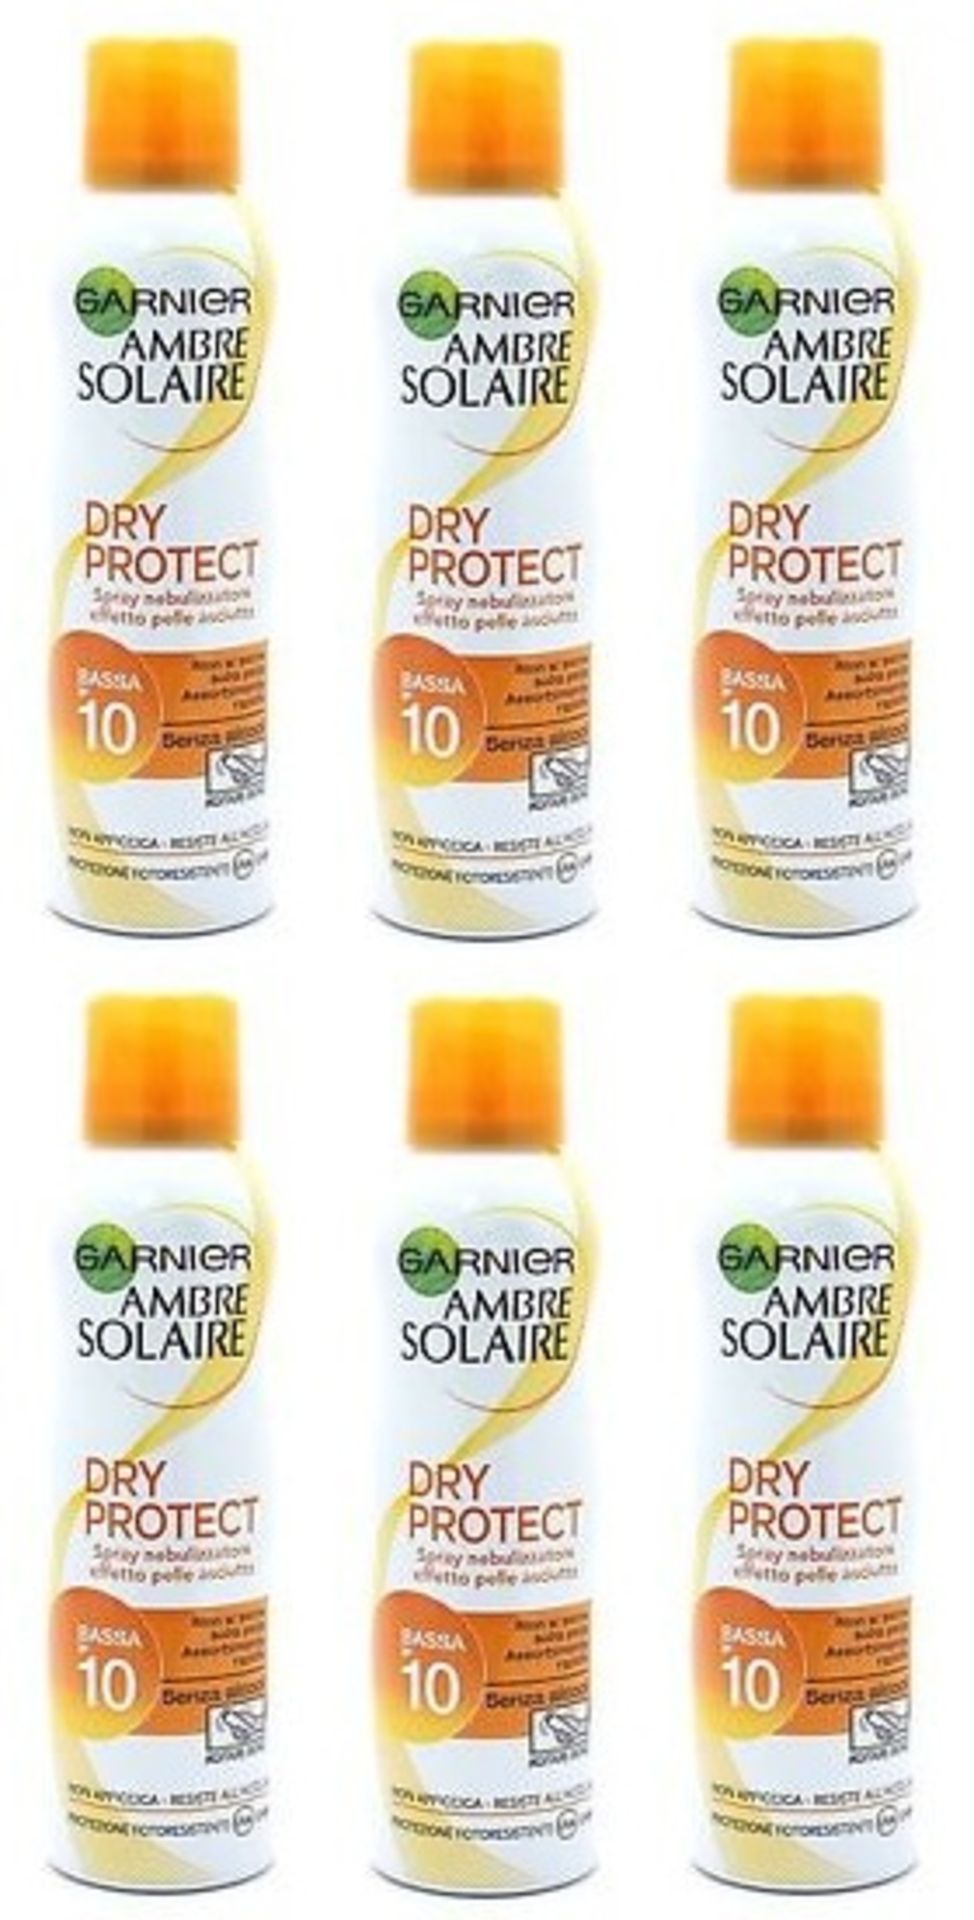 V Brand New 6 x Ambre Solaire Dry Protect Spray SPF10 200ml - Online Price £23.94